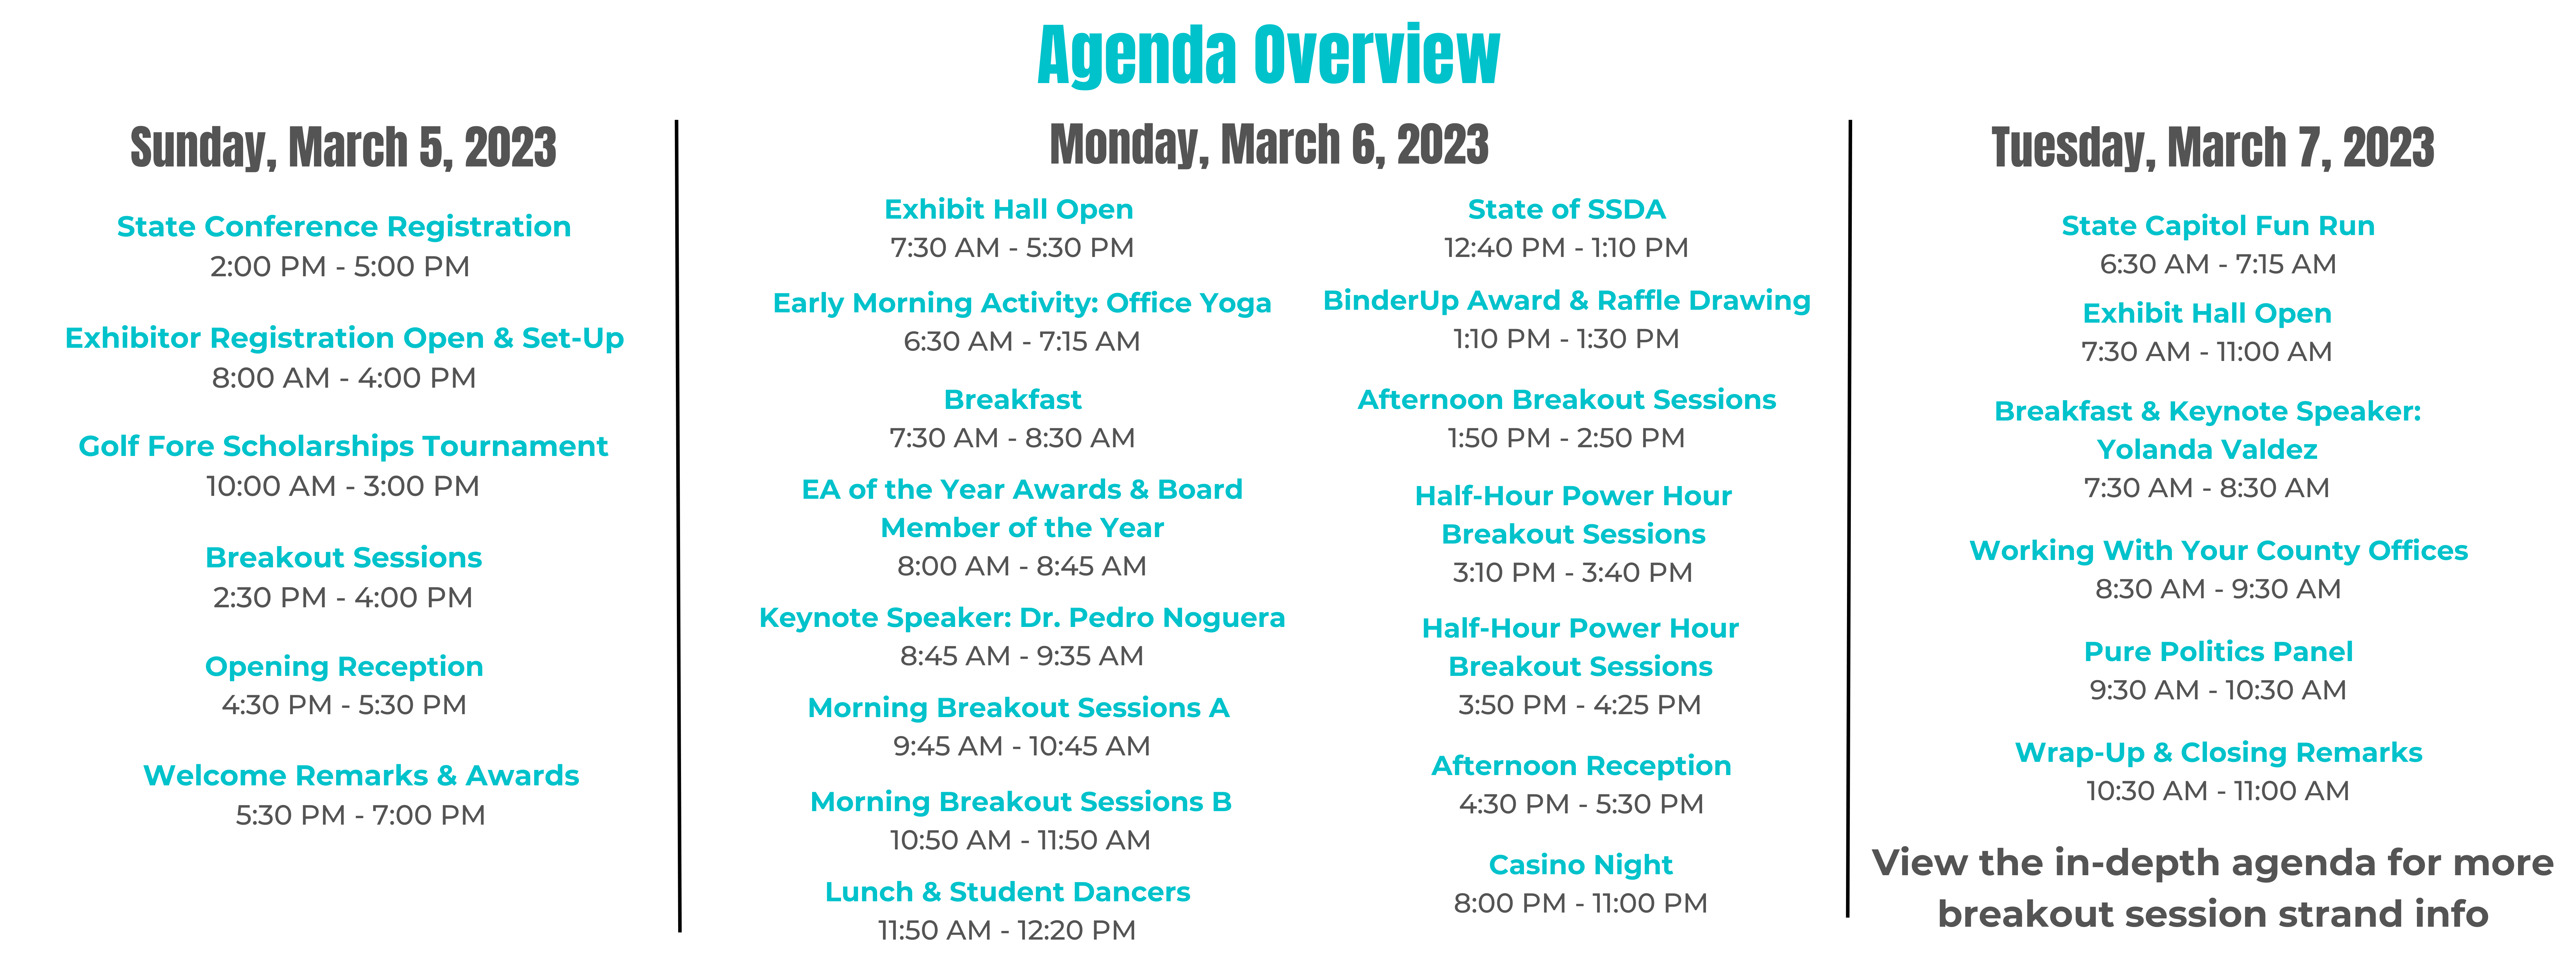 Agenda Overview